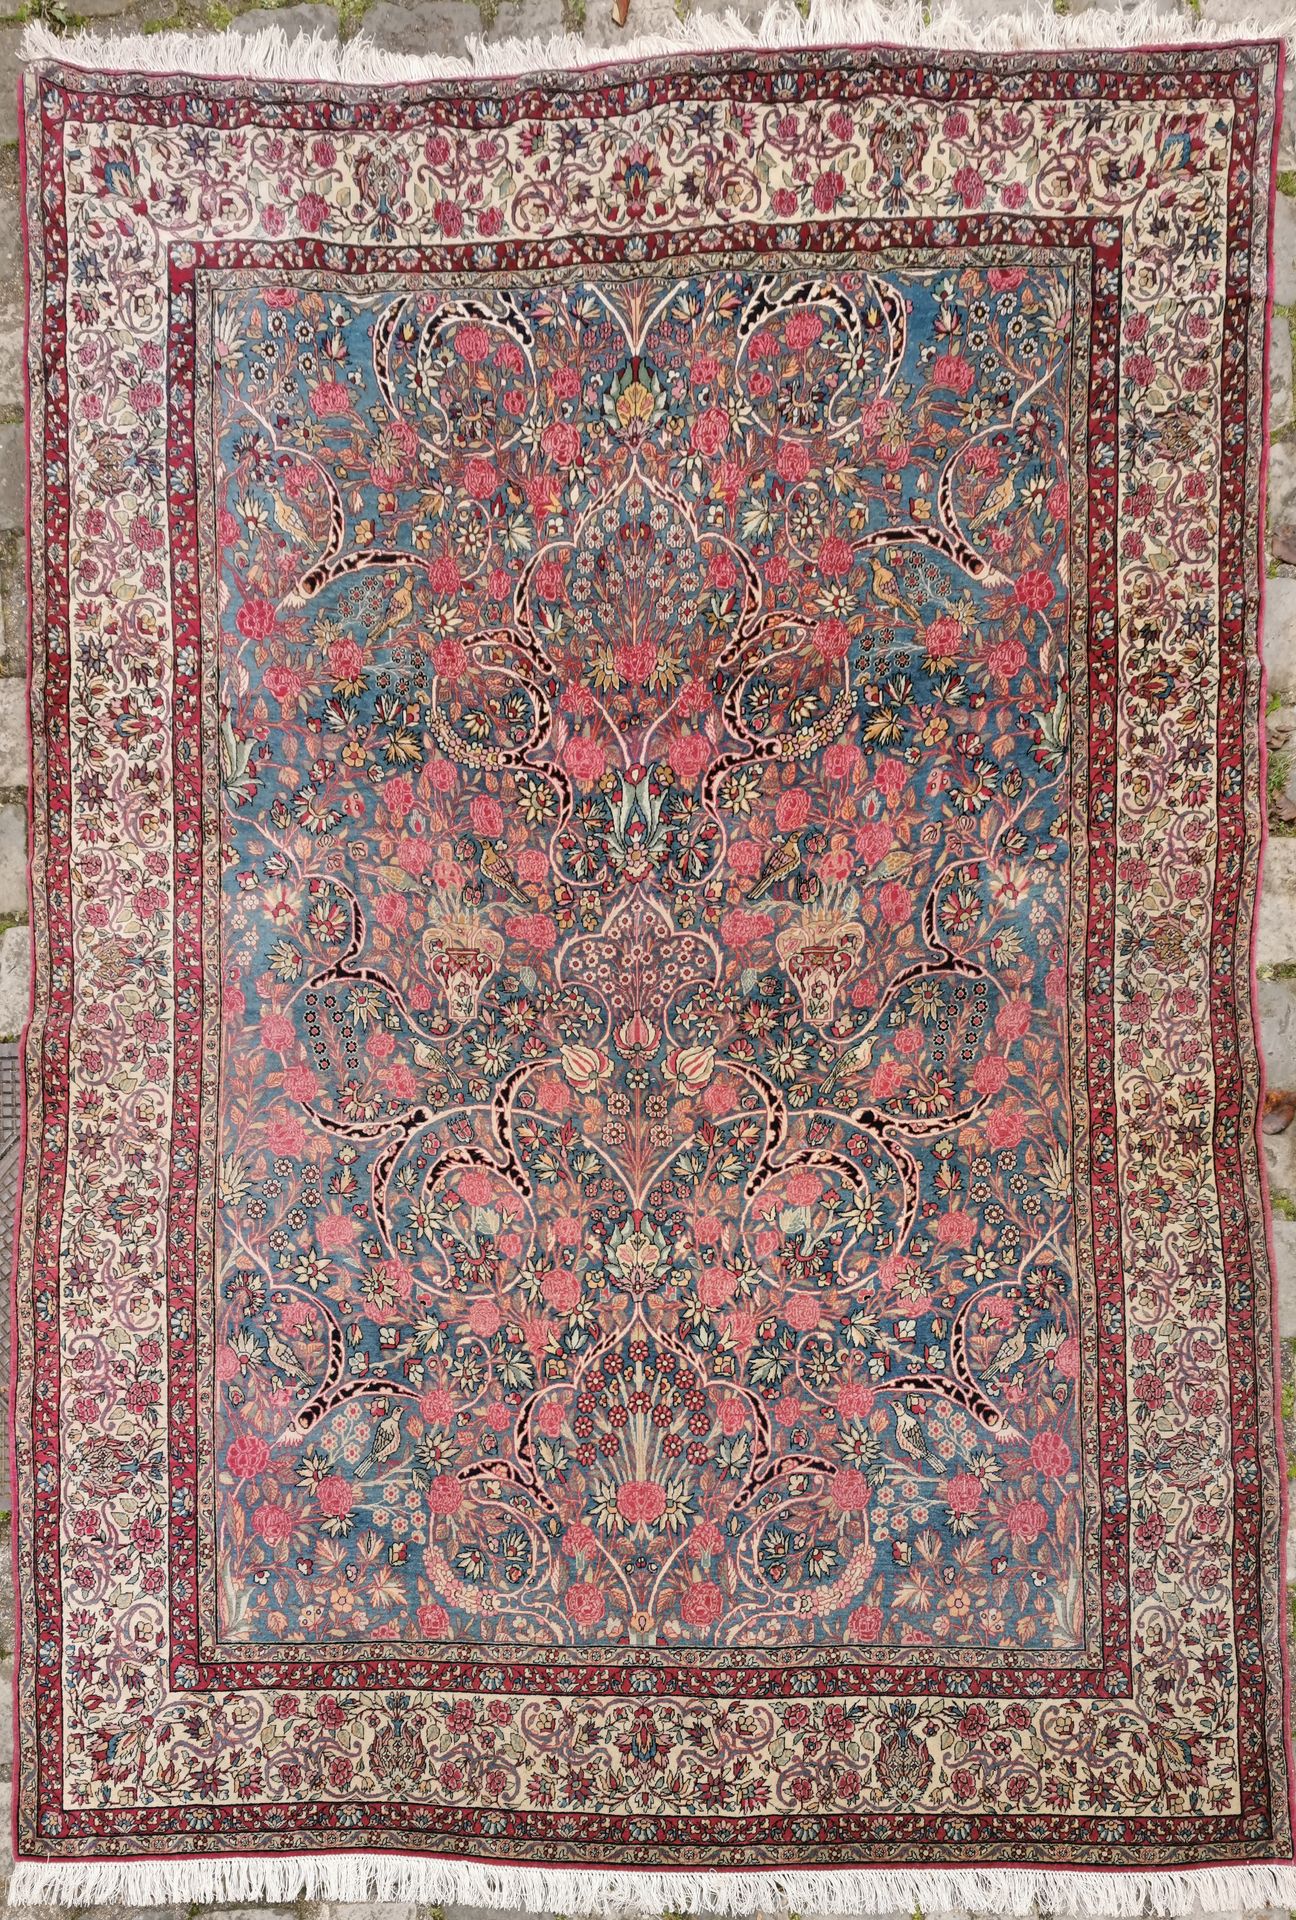 Null 大型精美的Kirman - 伊朗，20世纪初

尺寸：300 x 212 cm

技术特点

棉底的优质丝质羊羔毛绒

密度。每平方米约8000节

&hellip;